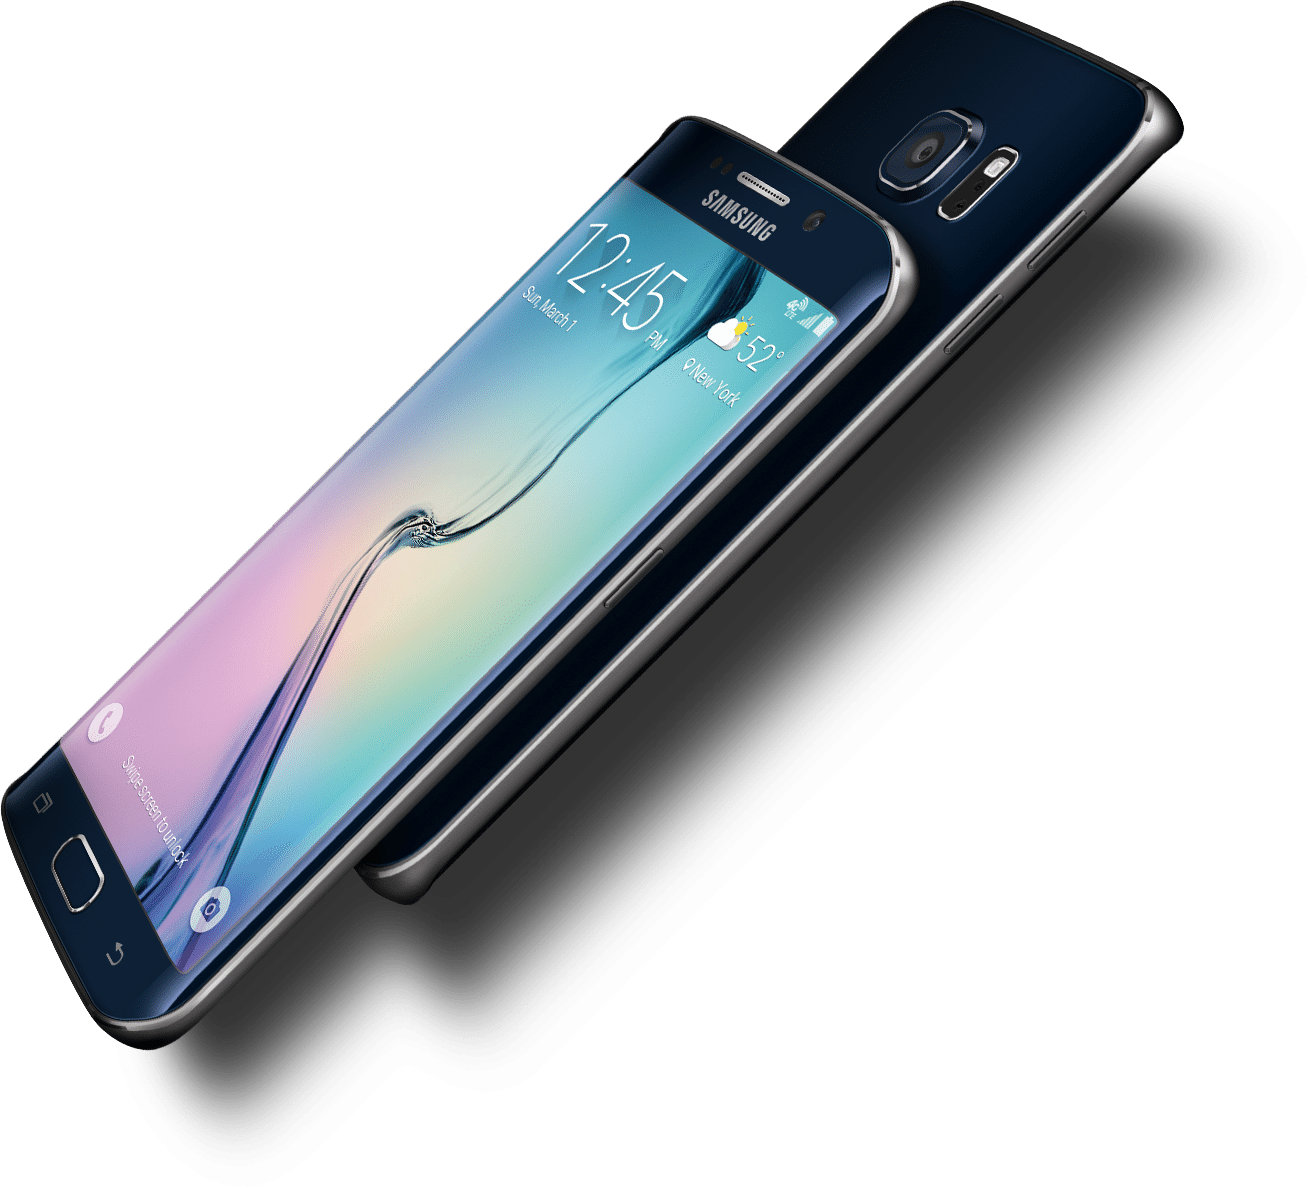 Samsung Galaxy S6 Edge, with dual edge display.